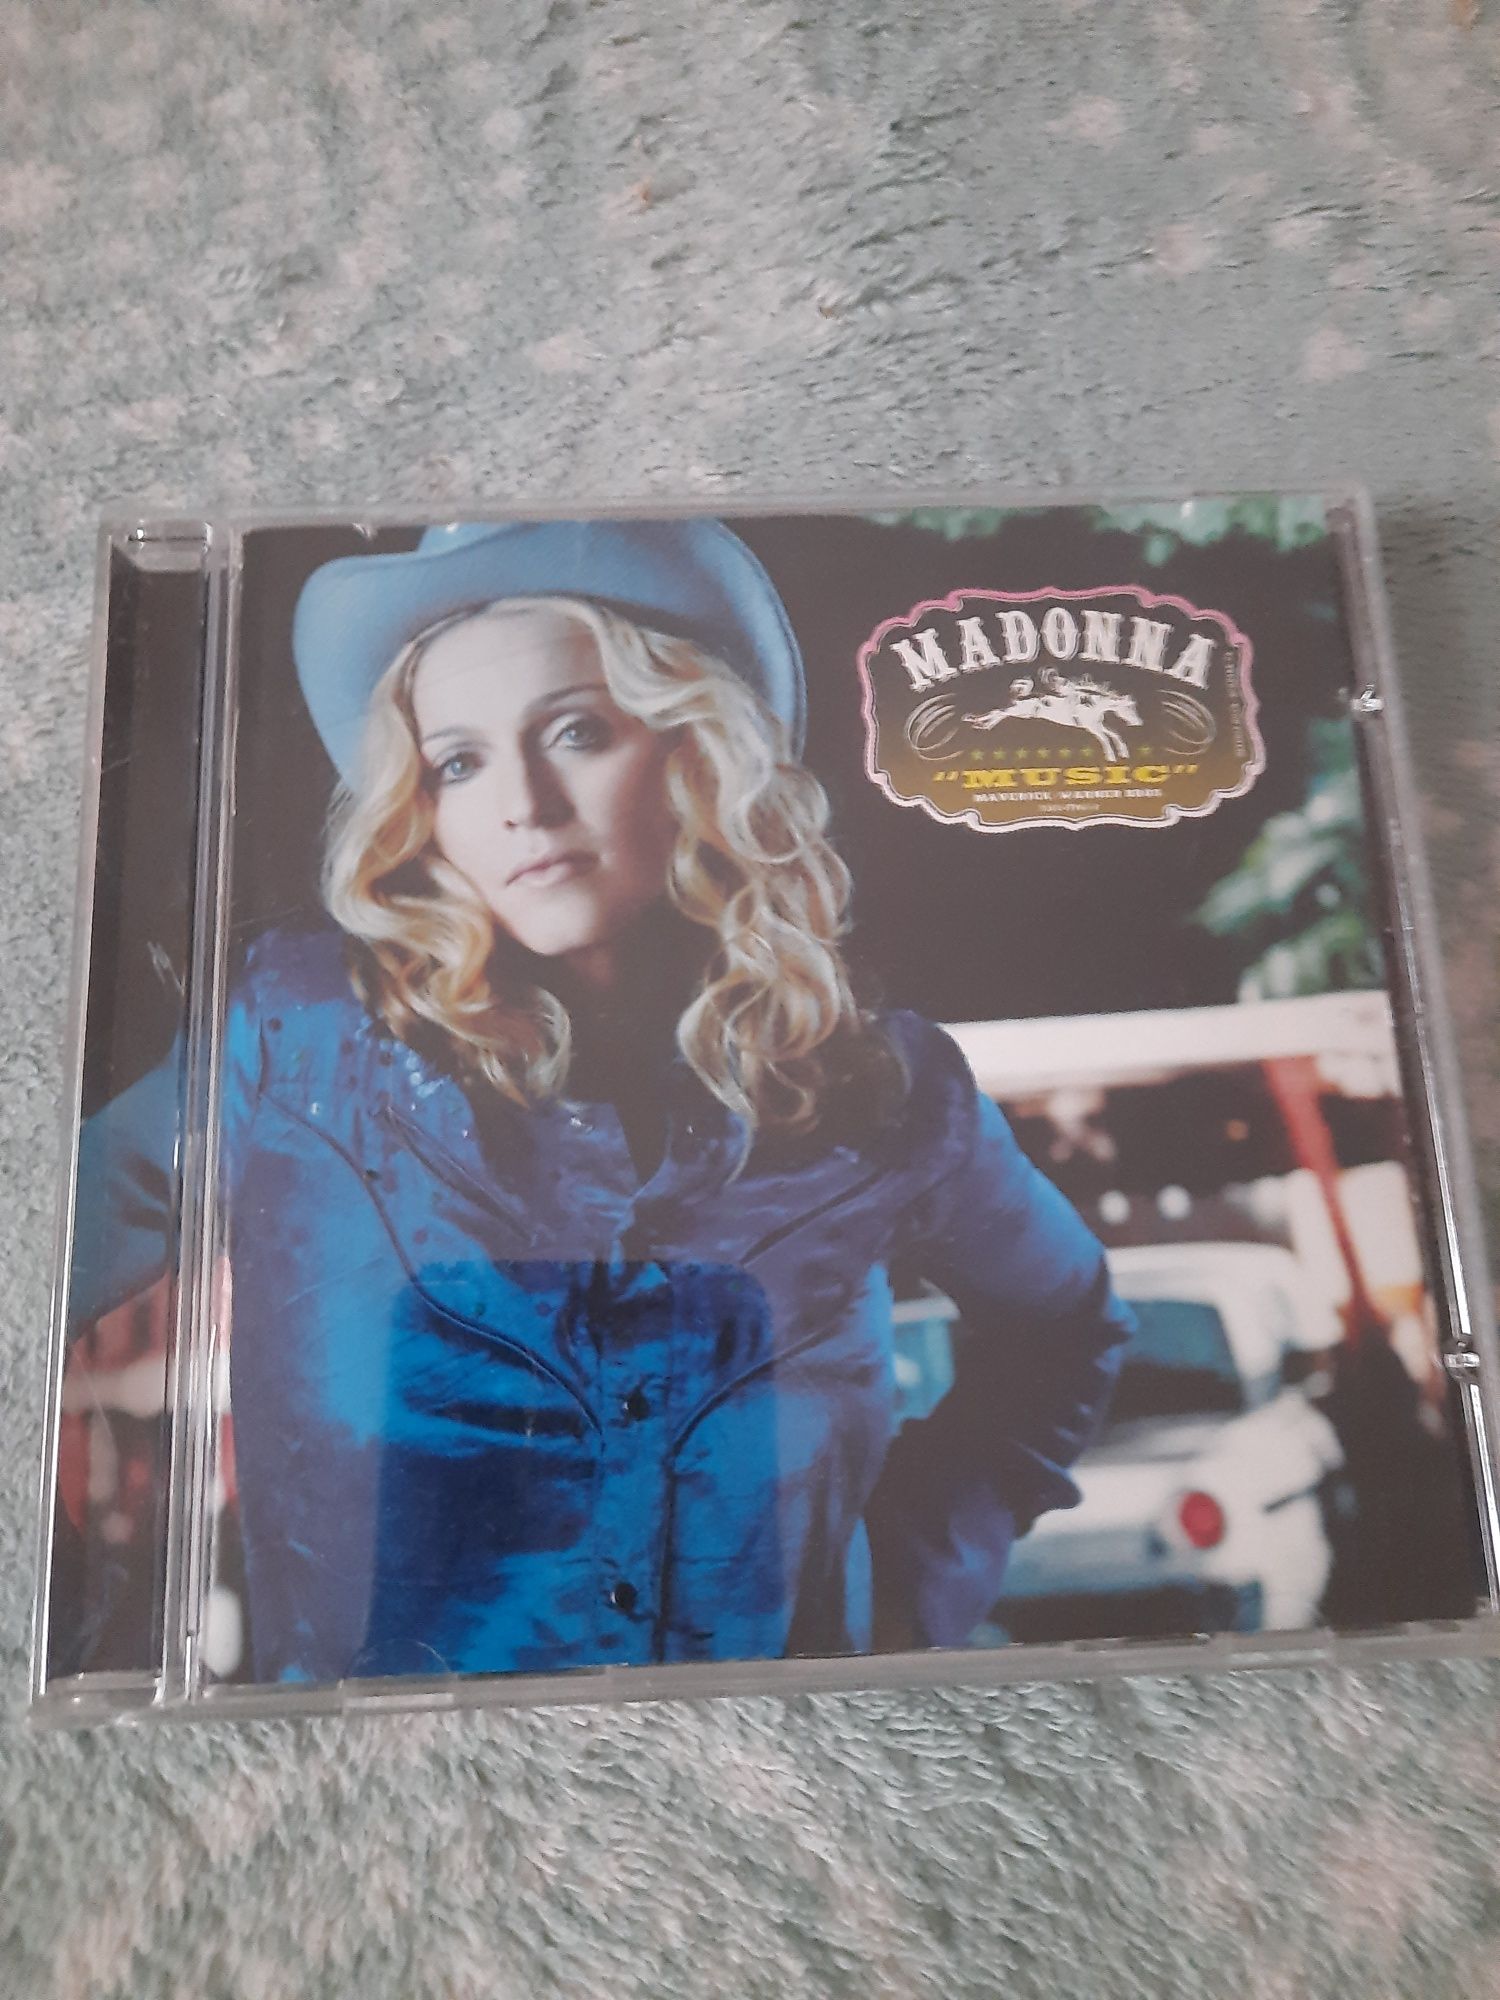 Madonna "Music" cd